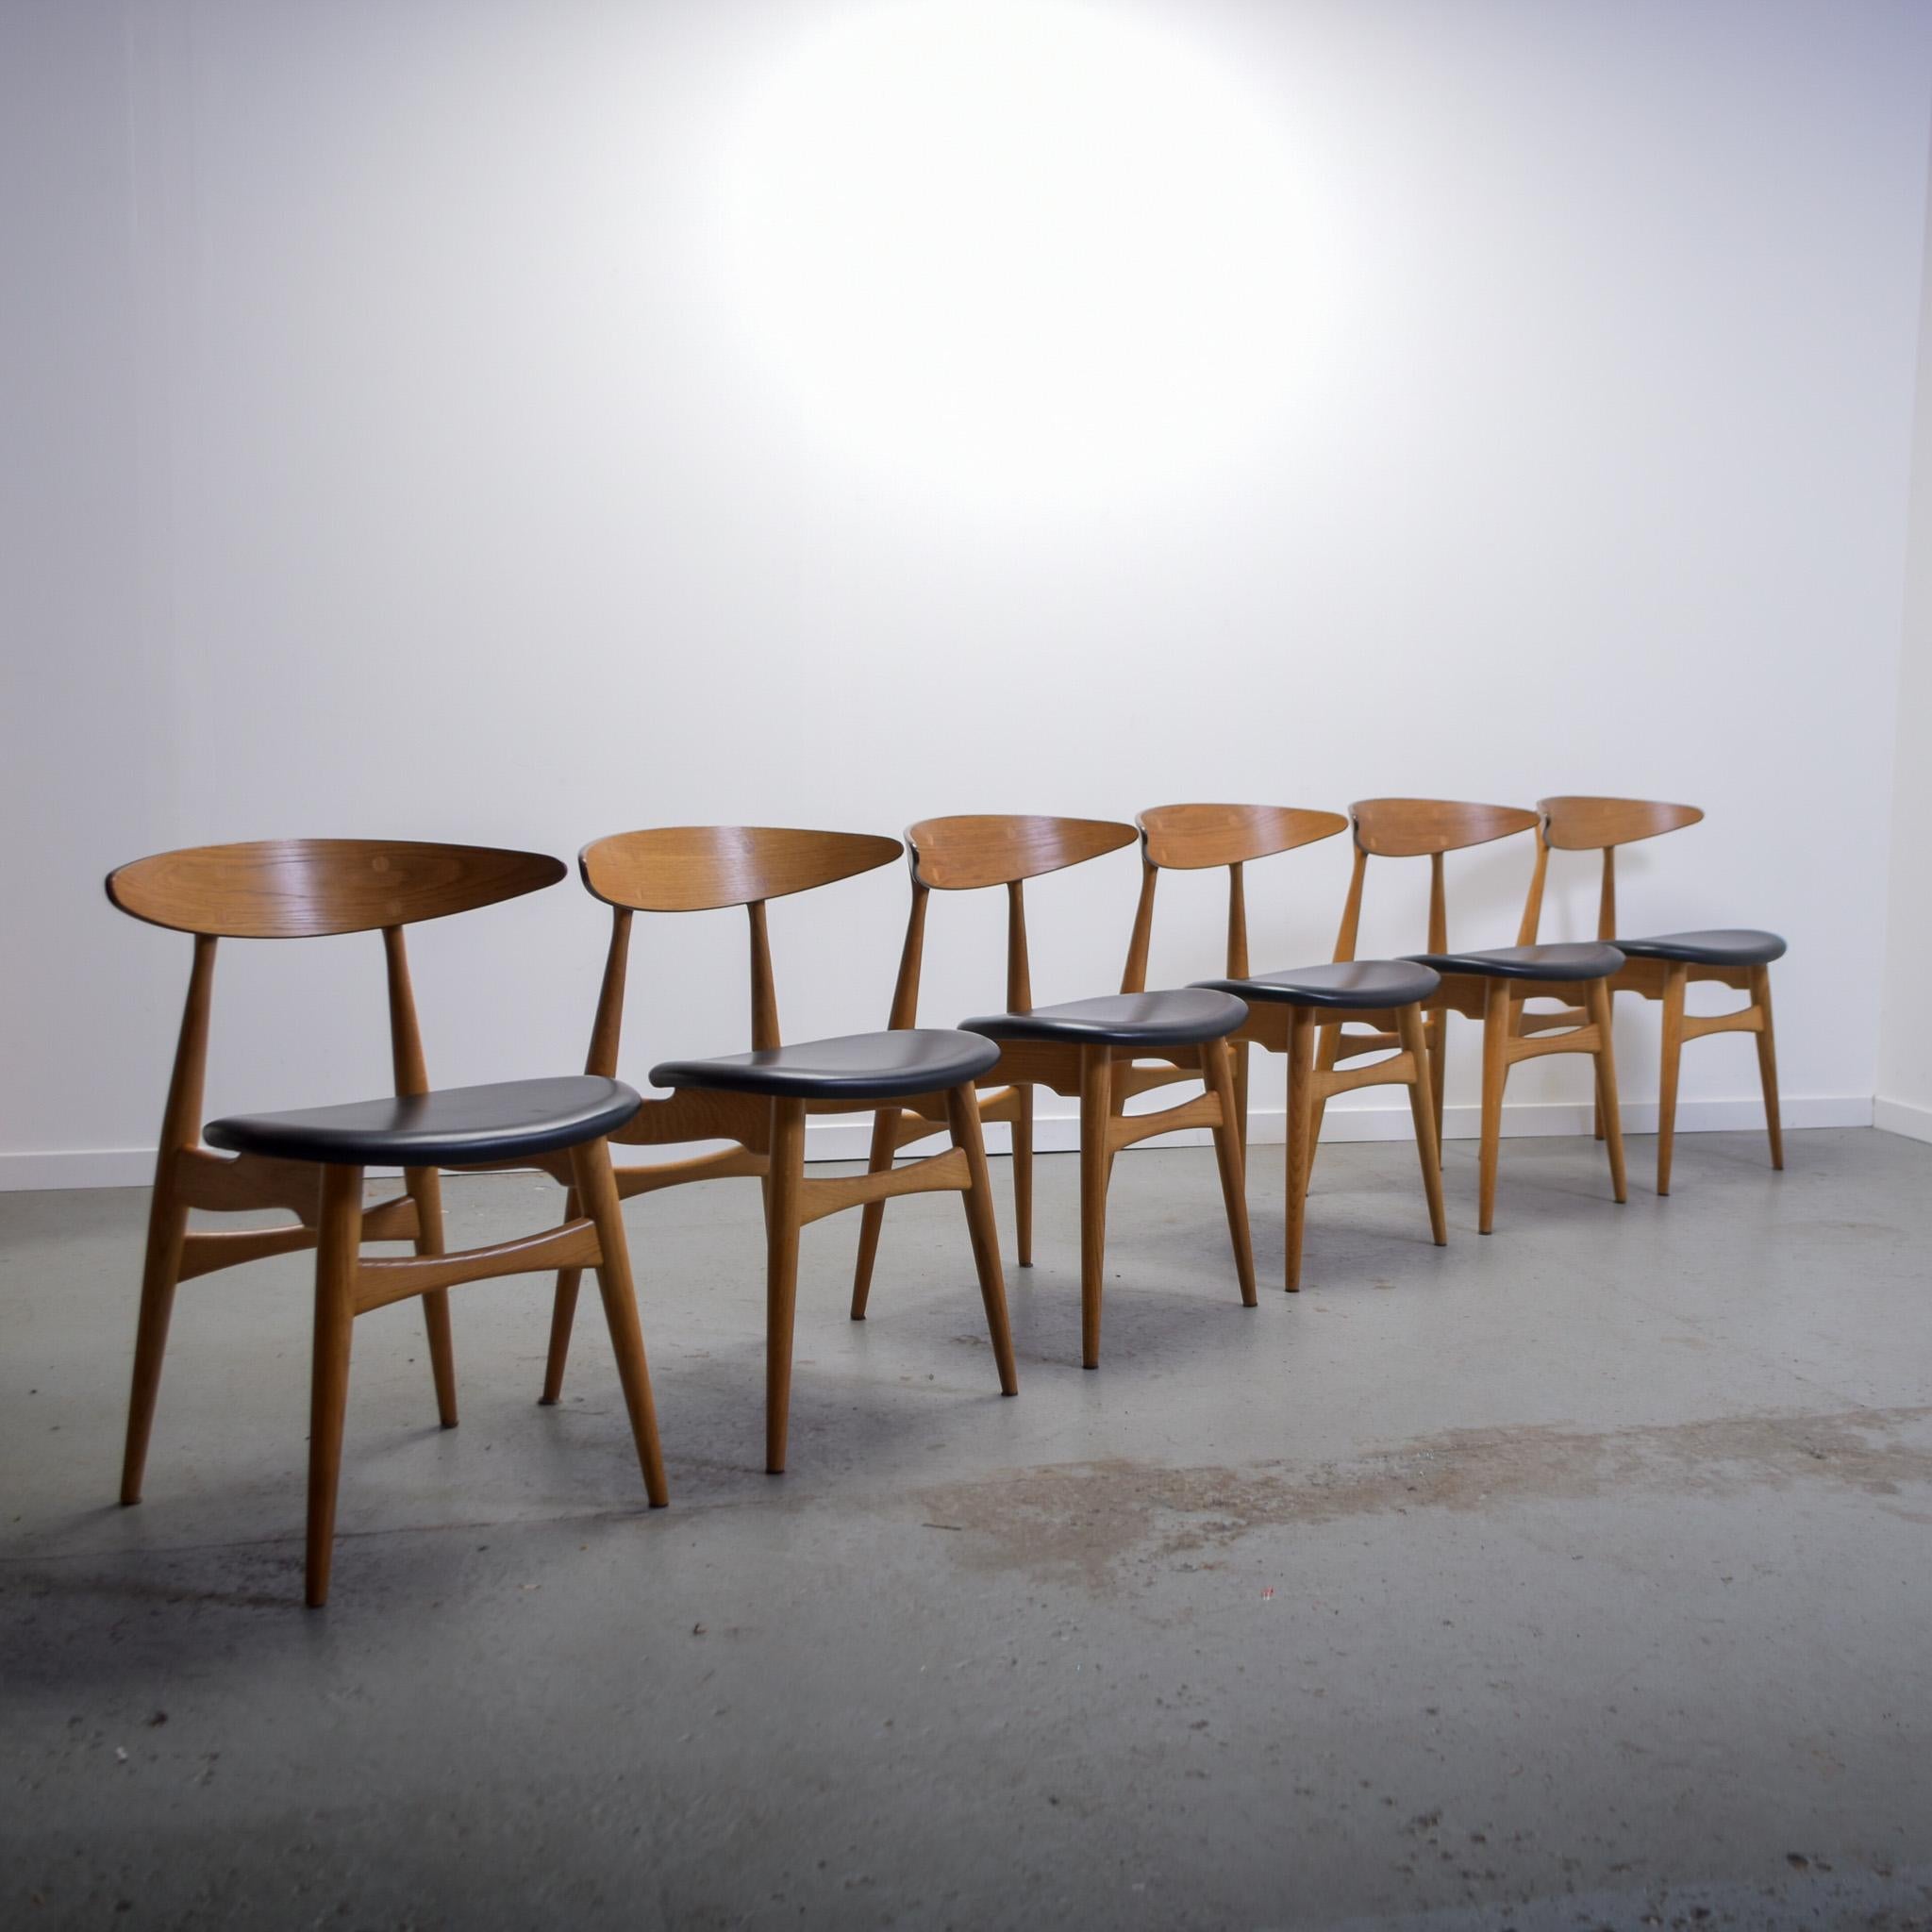 Mid-Century Modern CH33 dining chairs designed by Hans J. Wegner for Carl Hansen